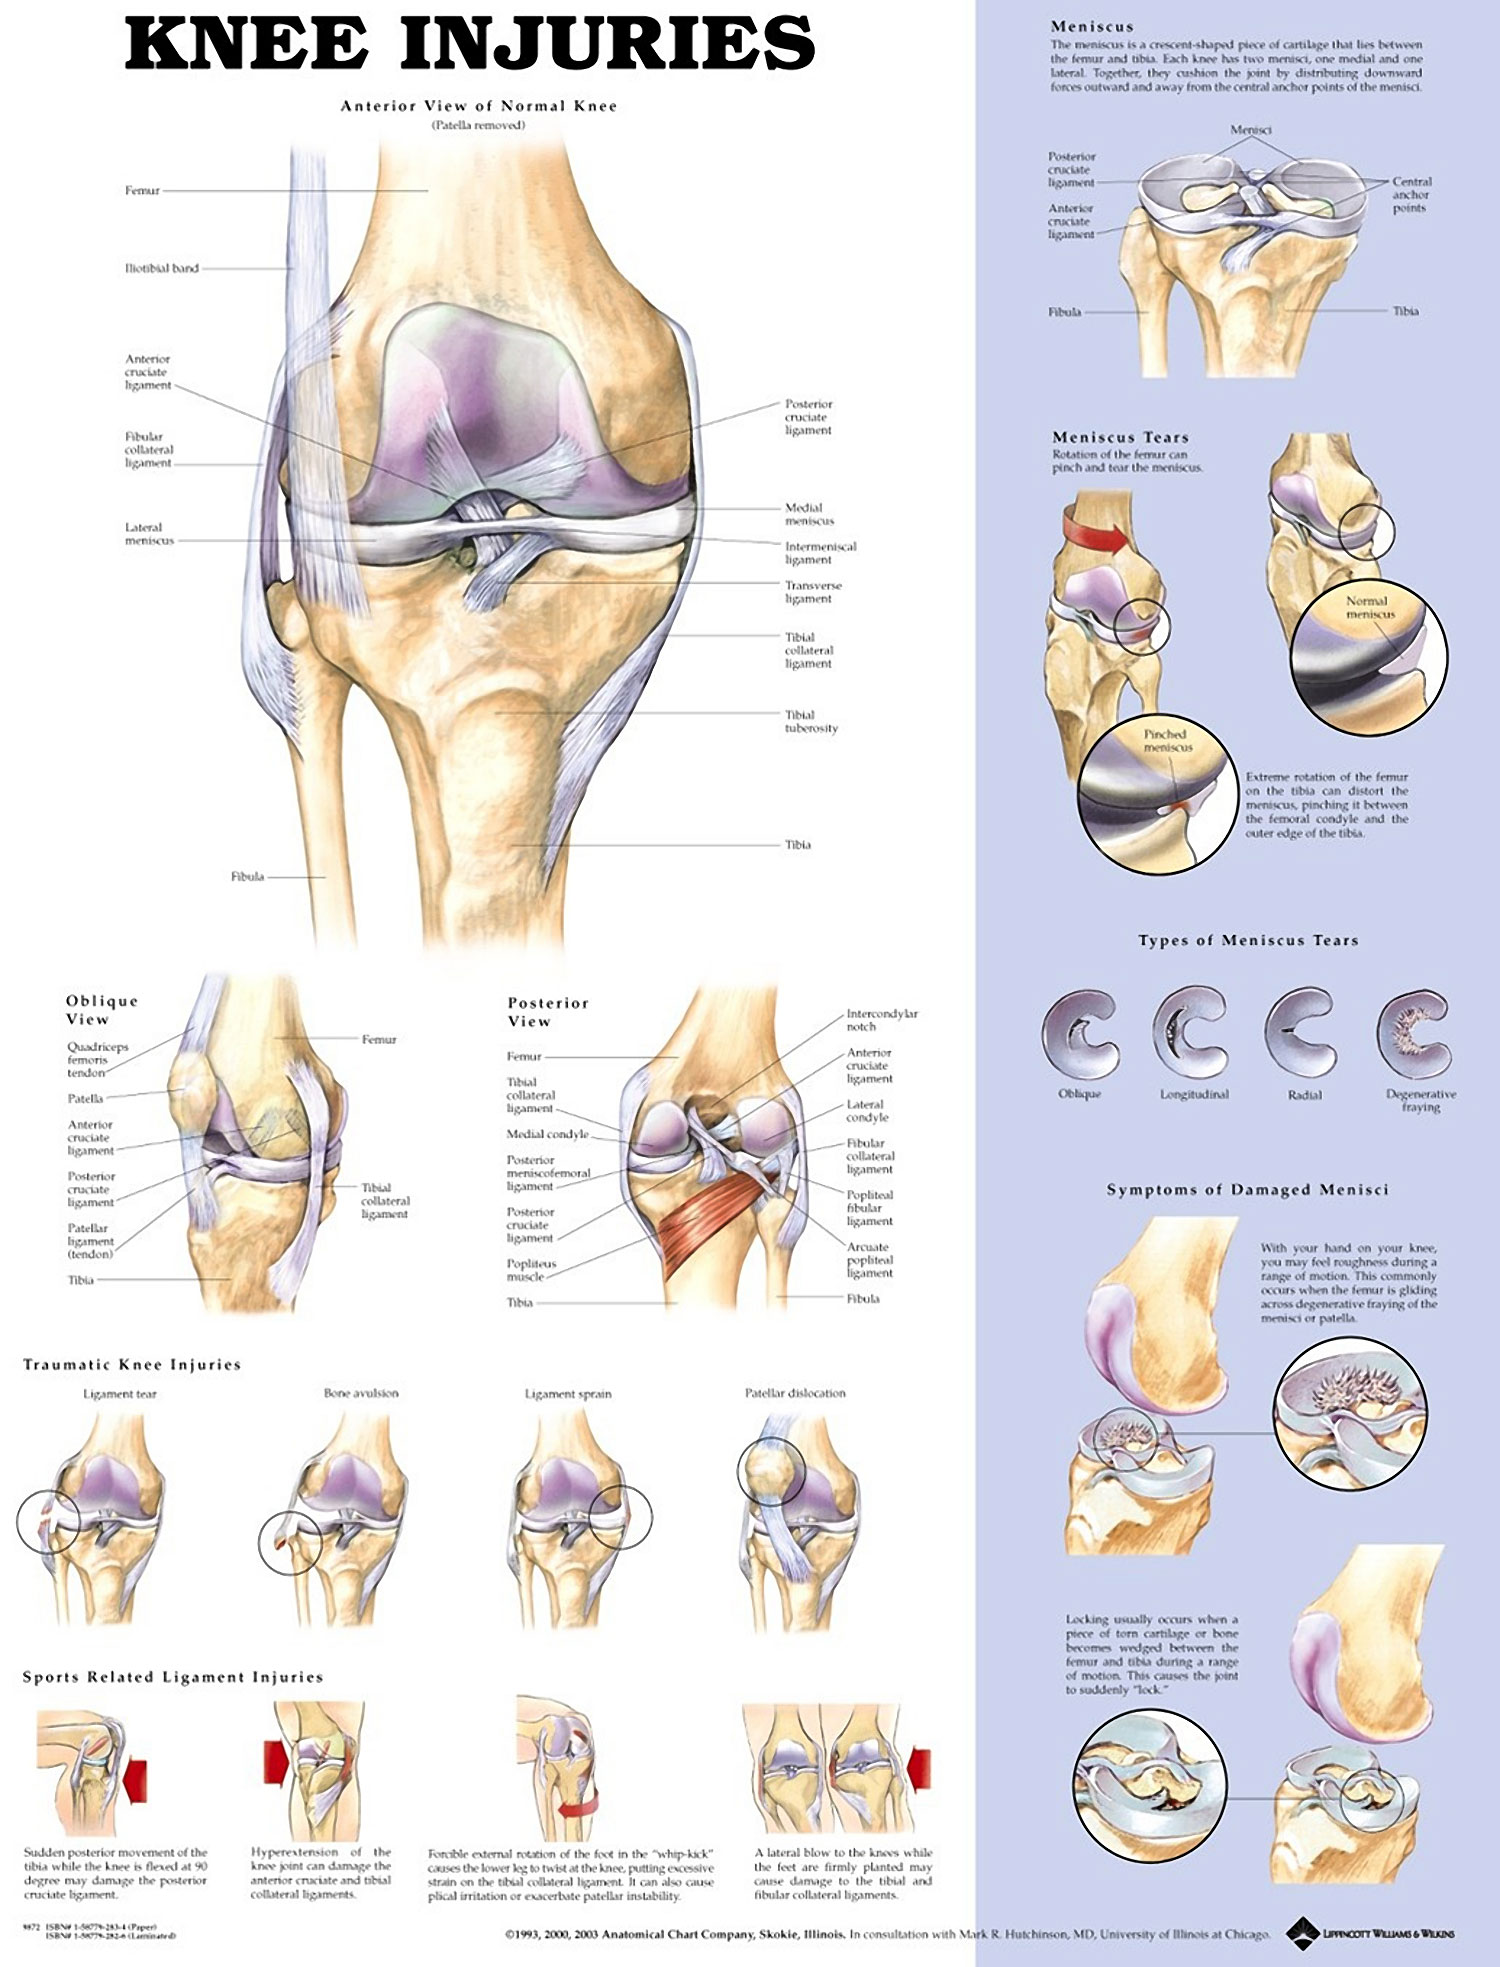 Knee Injuries Chart